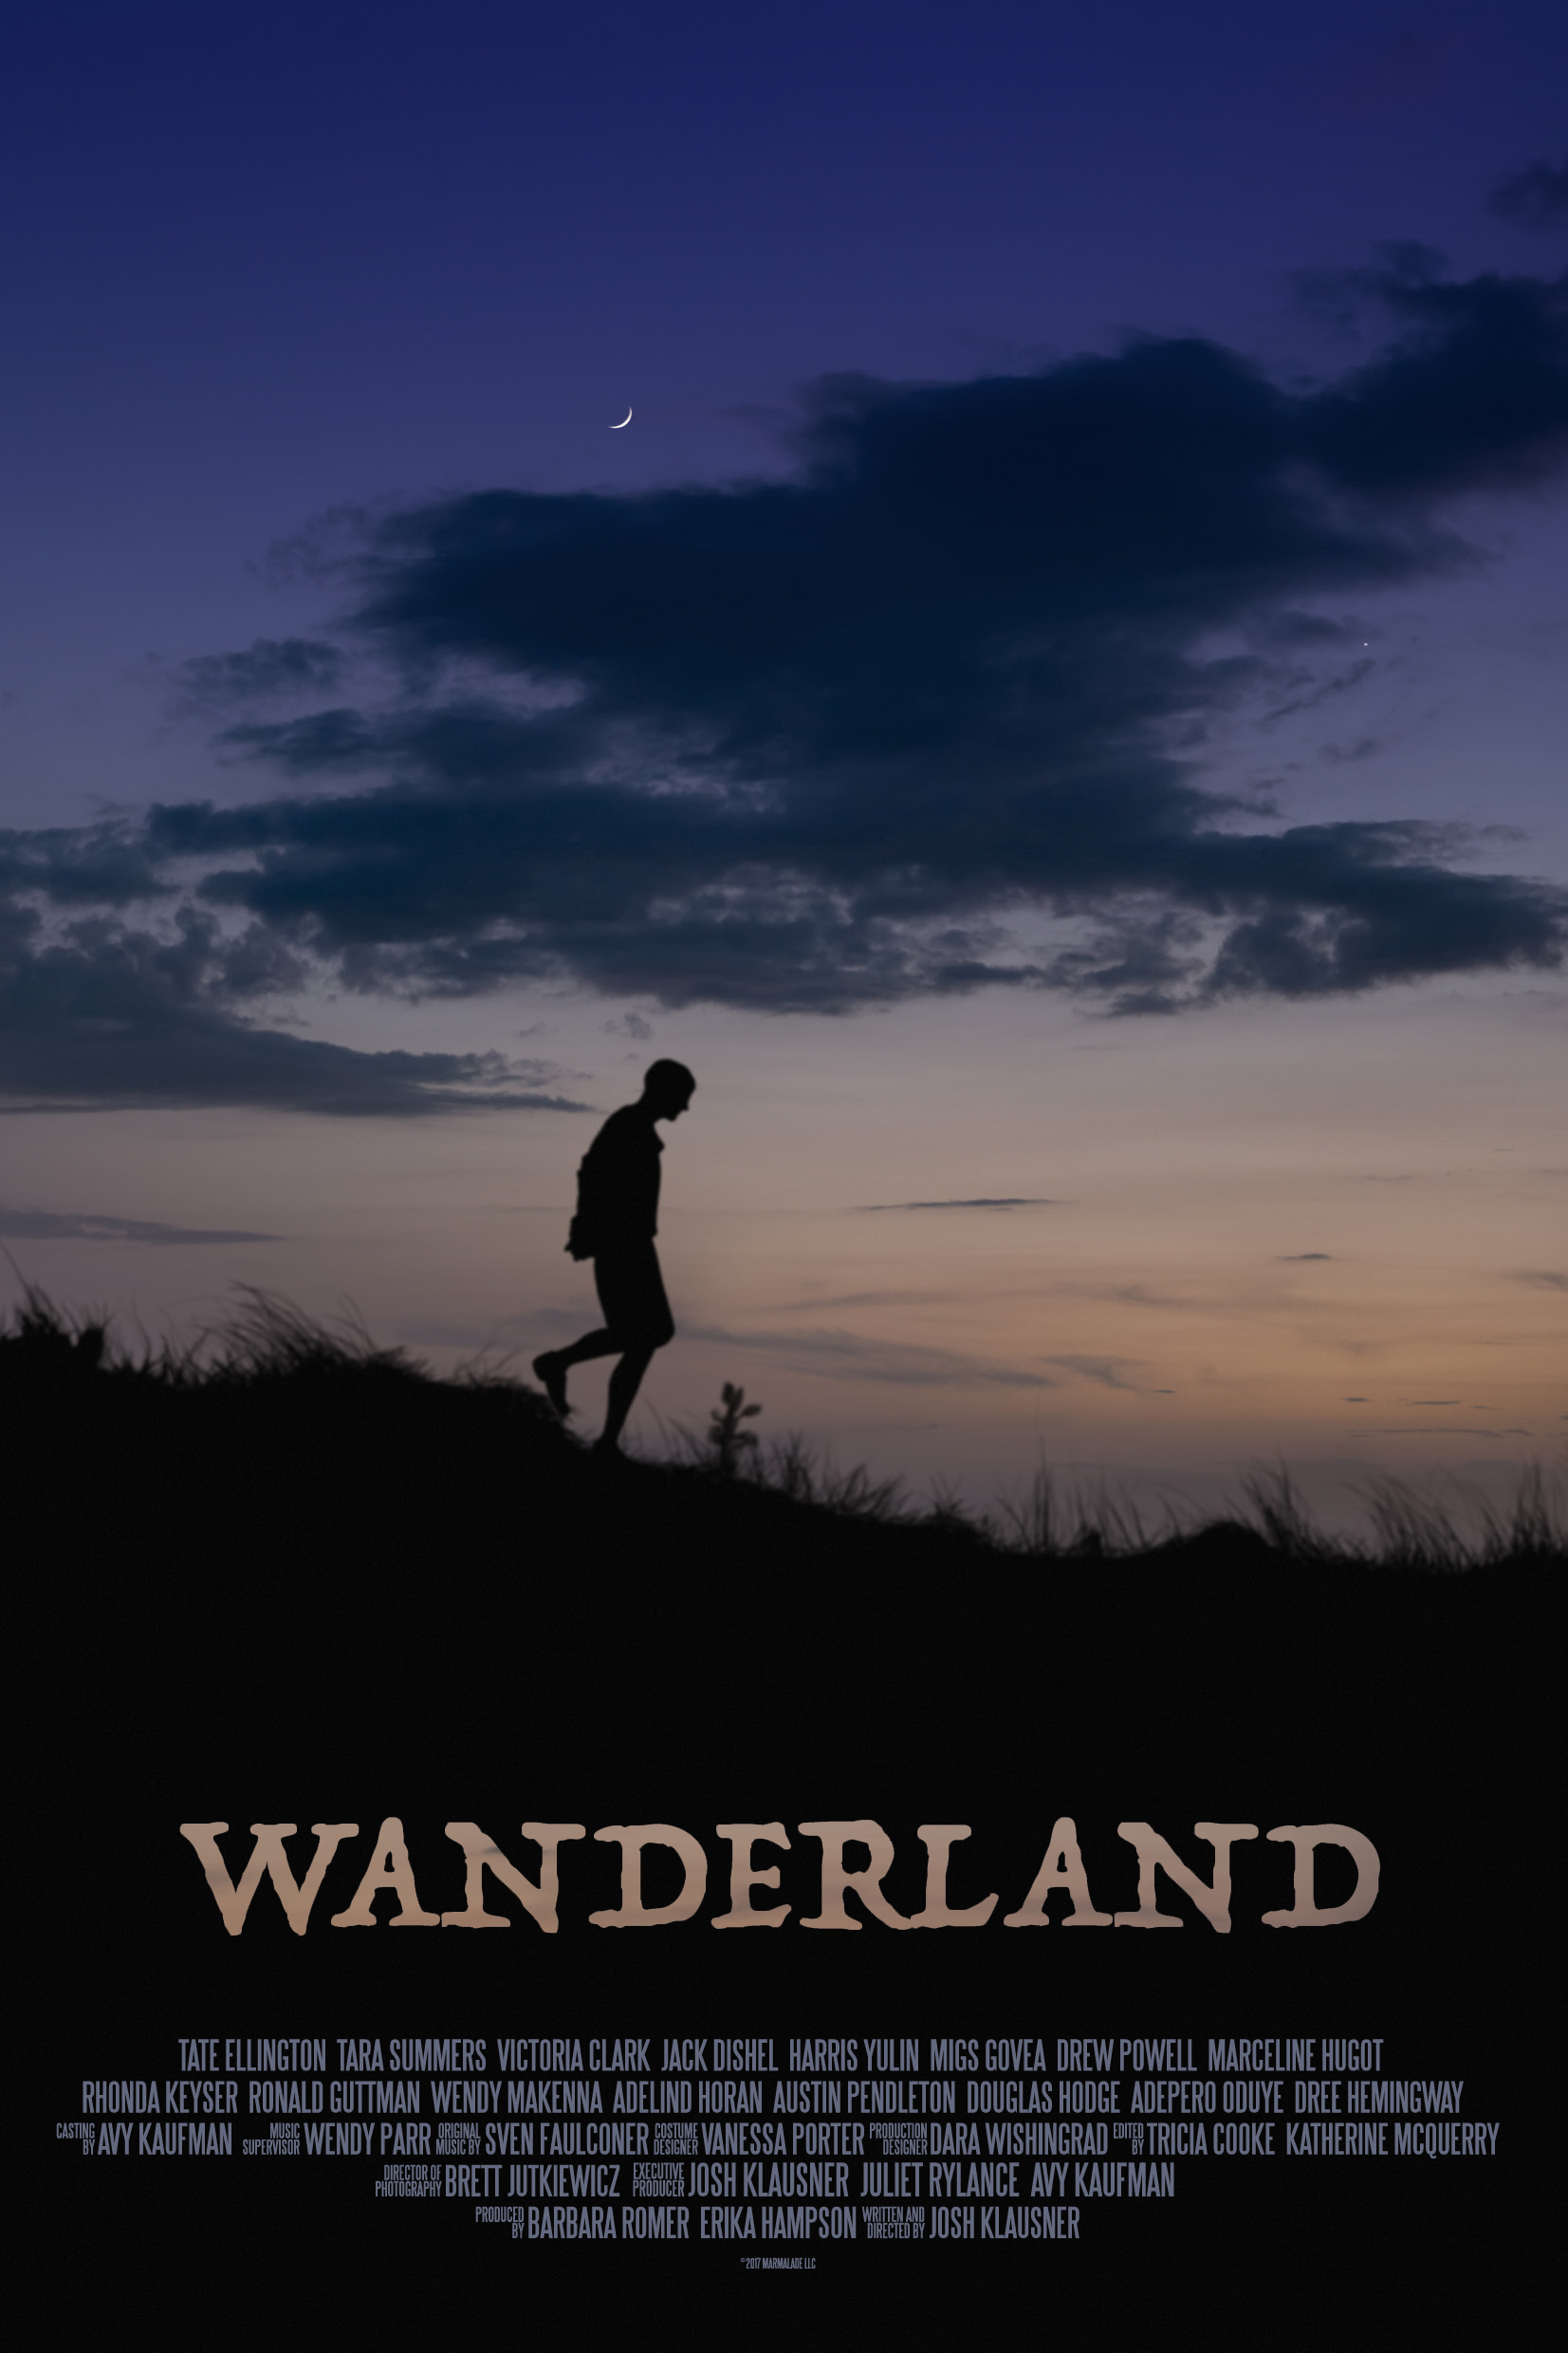 Nonton film Wanderland layarkaca21 indoxx1 ganool online streaming terbaru